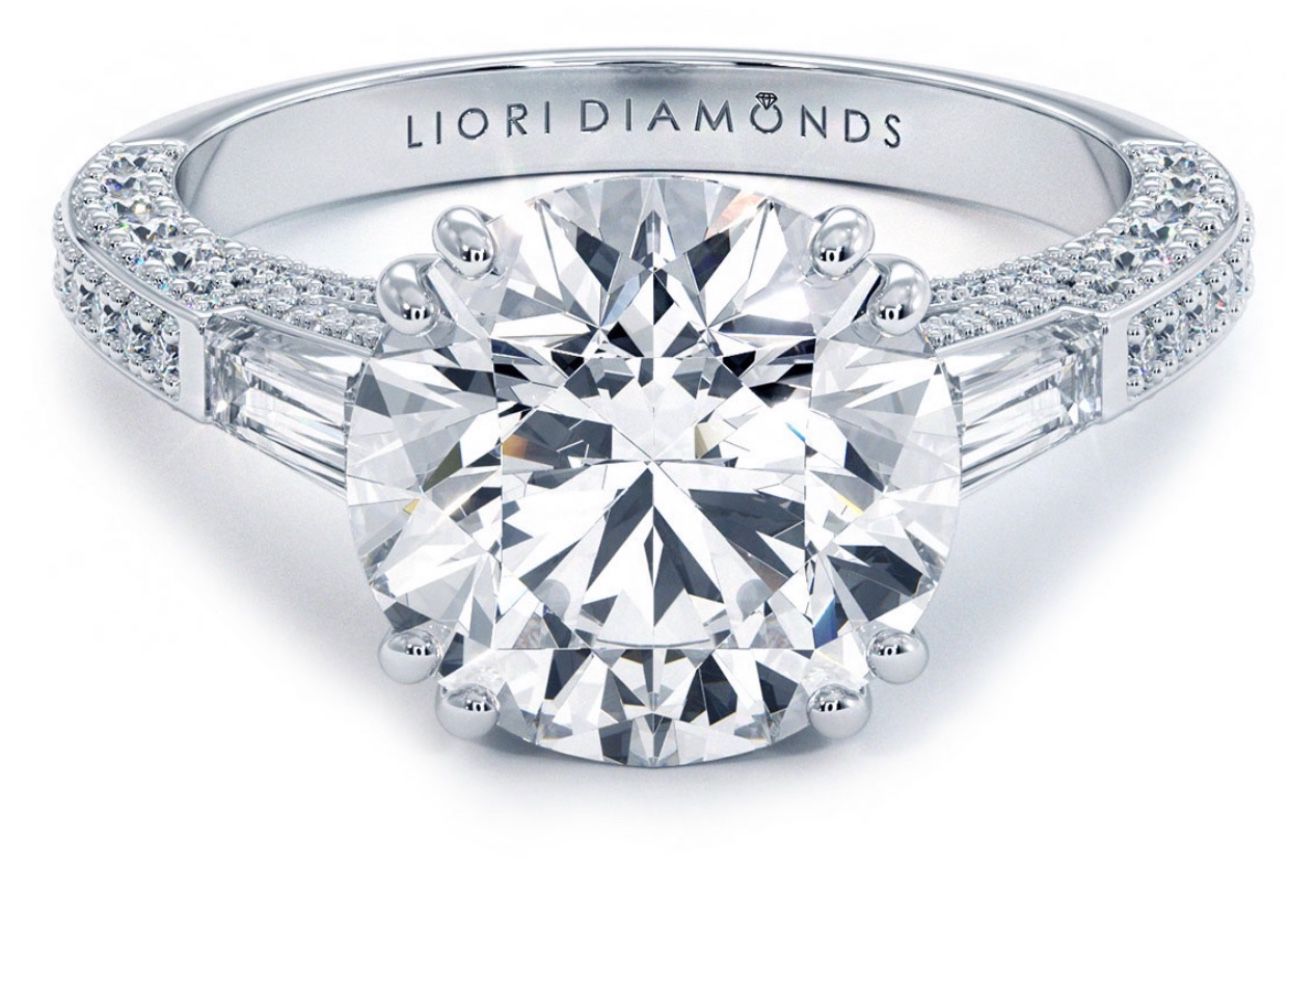 4.5ct Diamond Engagement Ring GIA